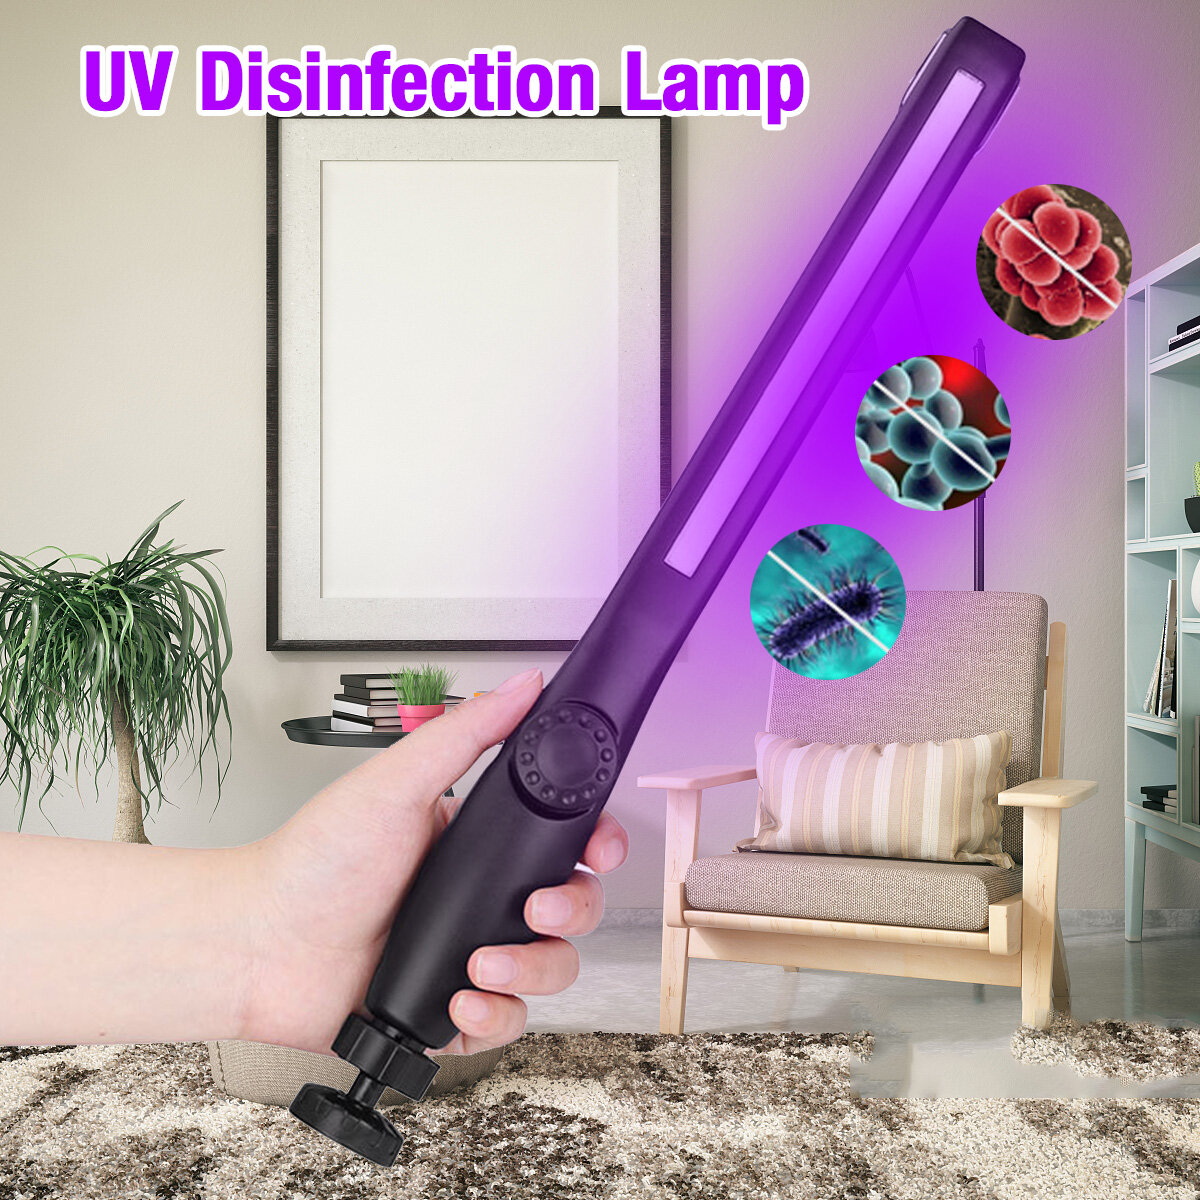 

DC5V UV Germicidal Lamp 360° USB Disinfection Hand-held Home Sterilization COB Light for Home